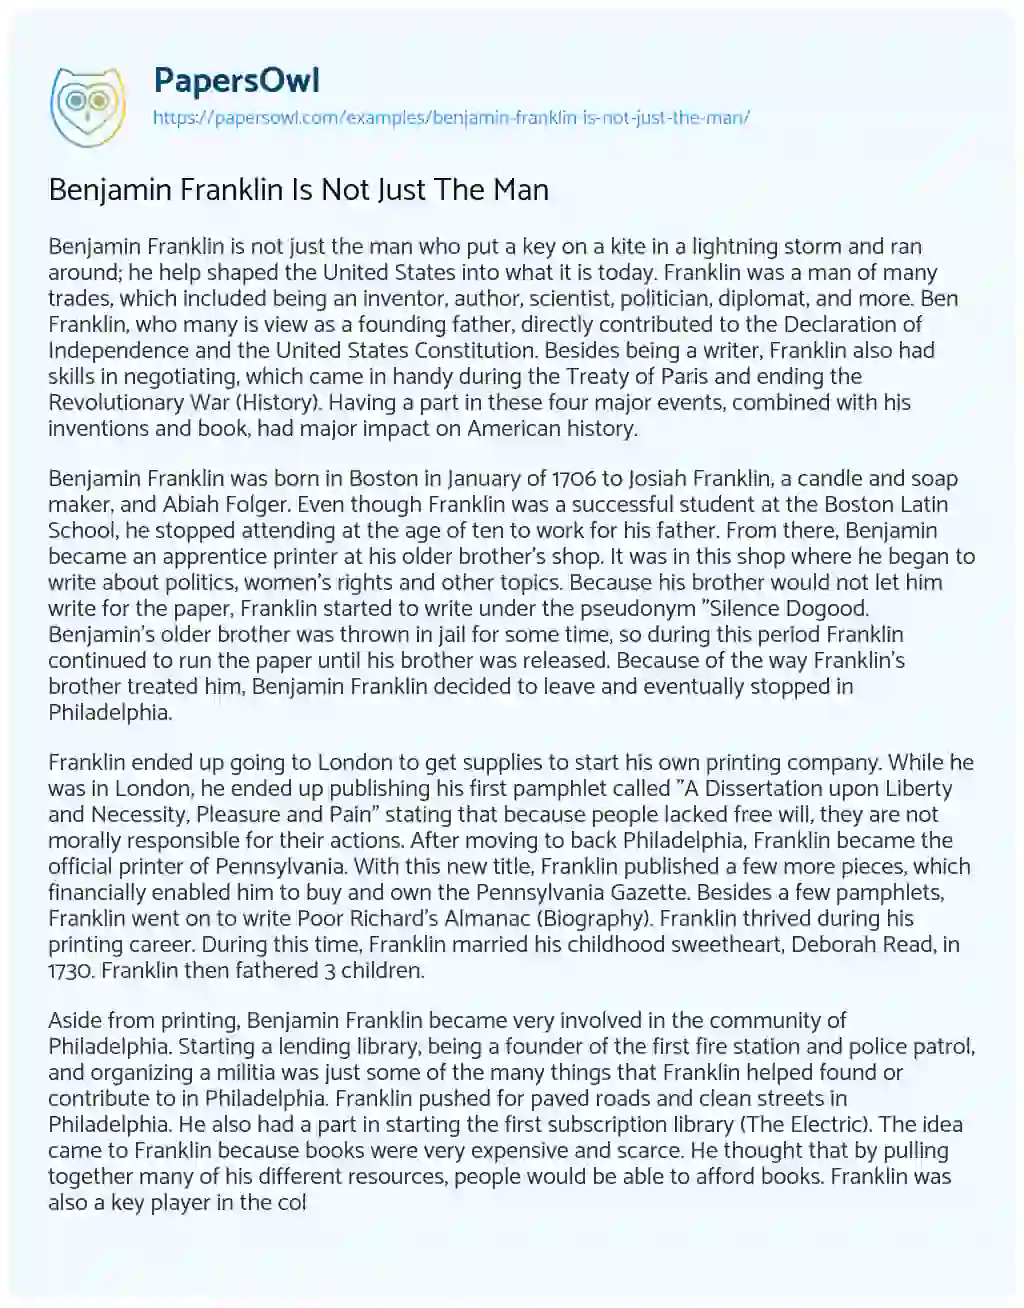 Essay on Benjamin Franklin is not Just the Man